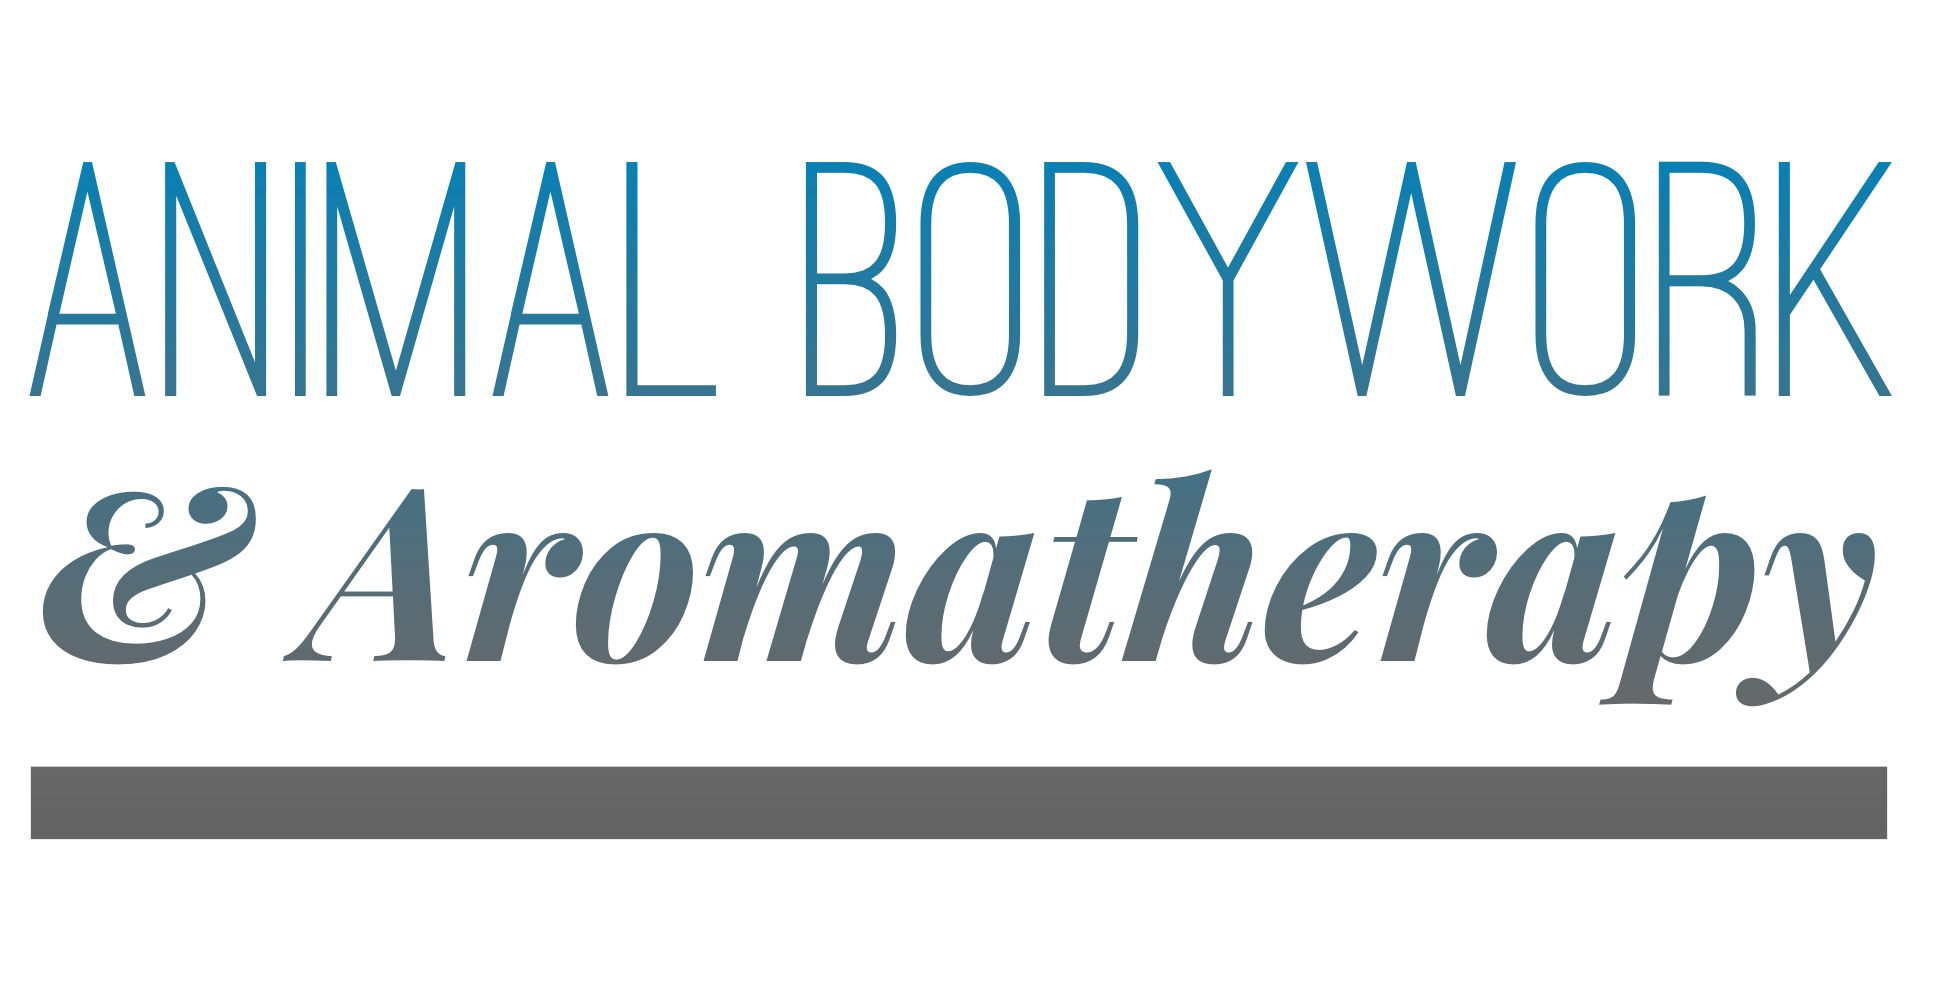 Animal Bodywork and Aromatherapy NJ